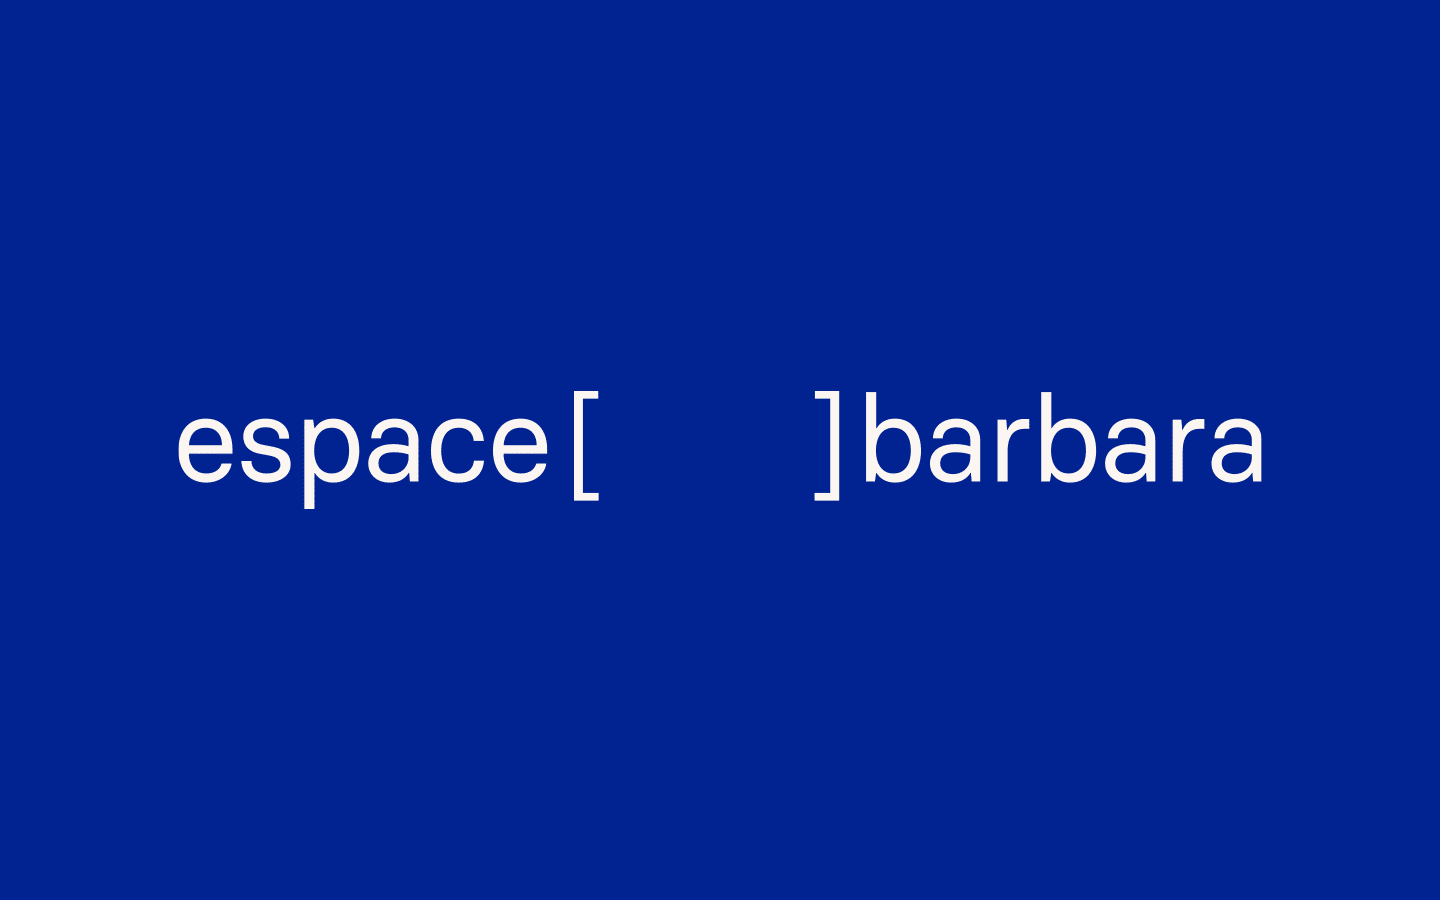 Espace Barbara